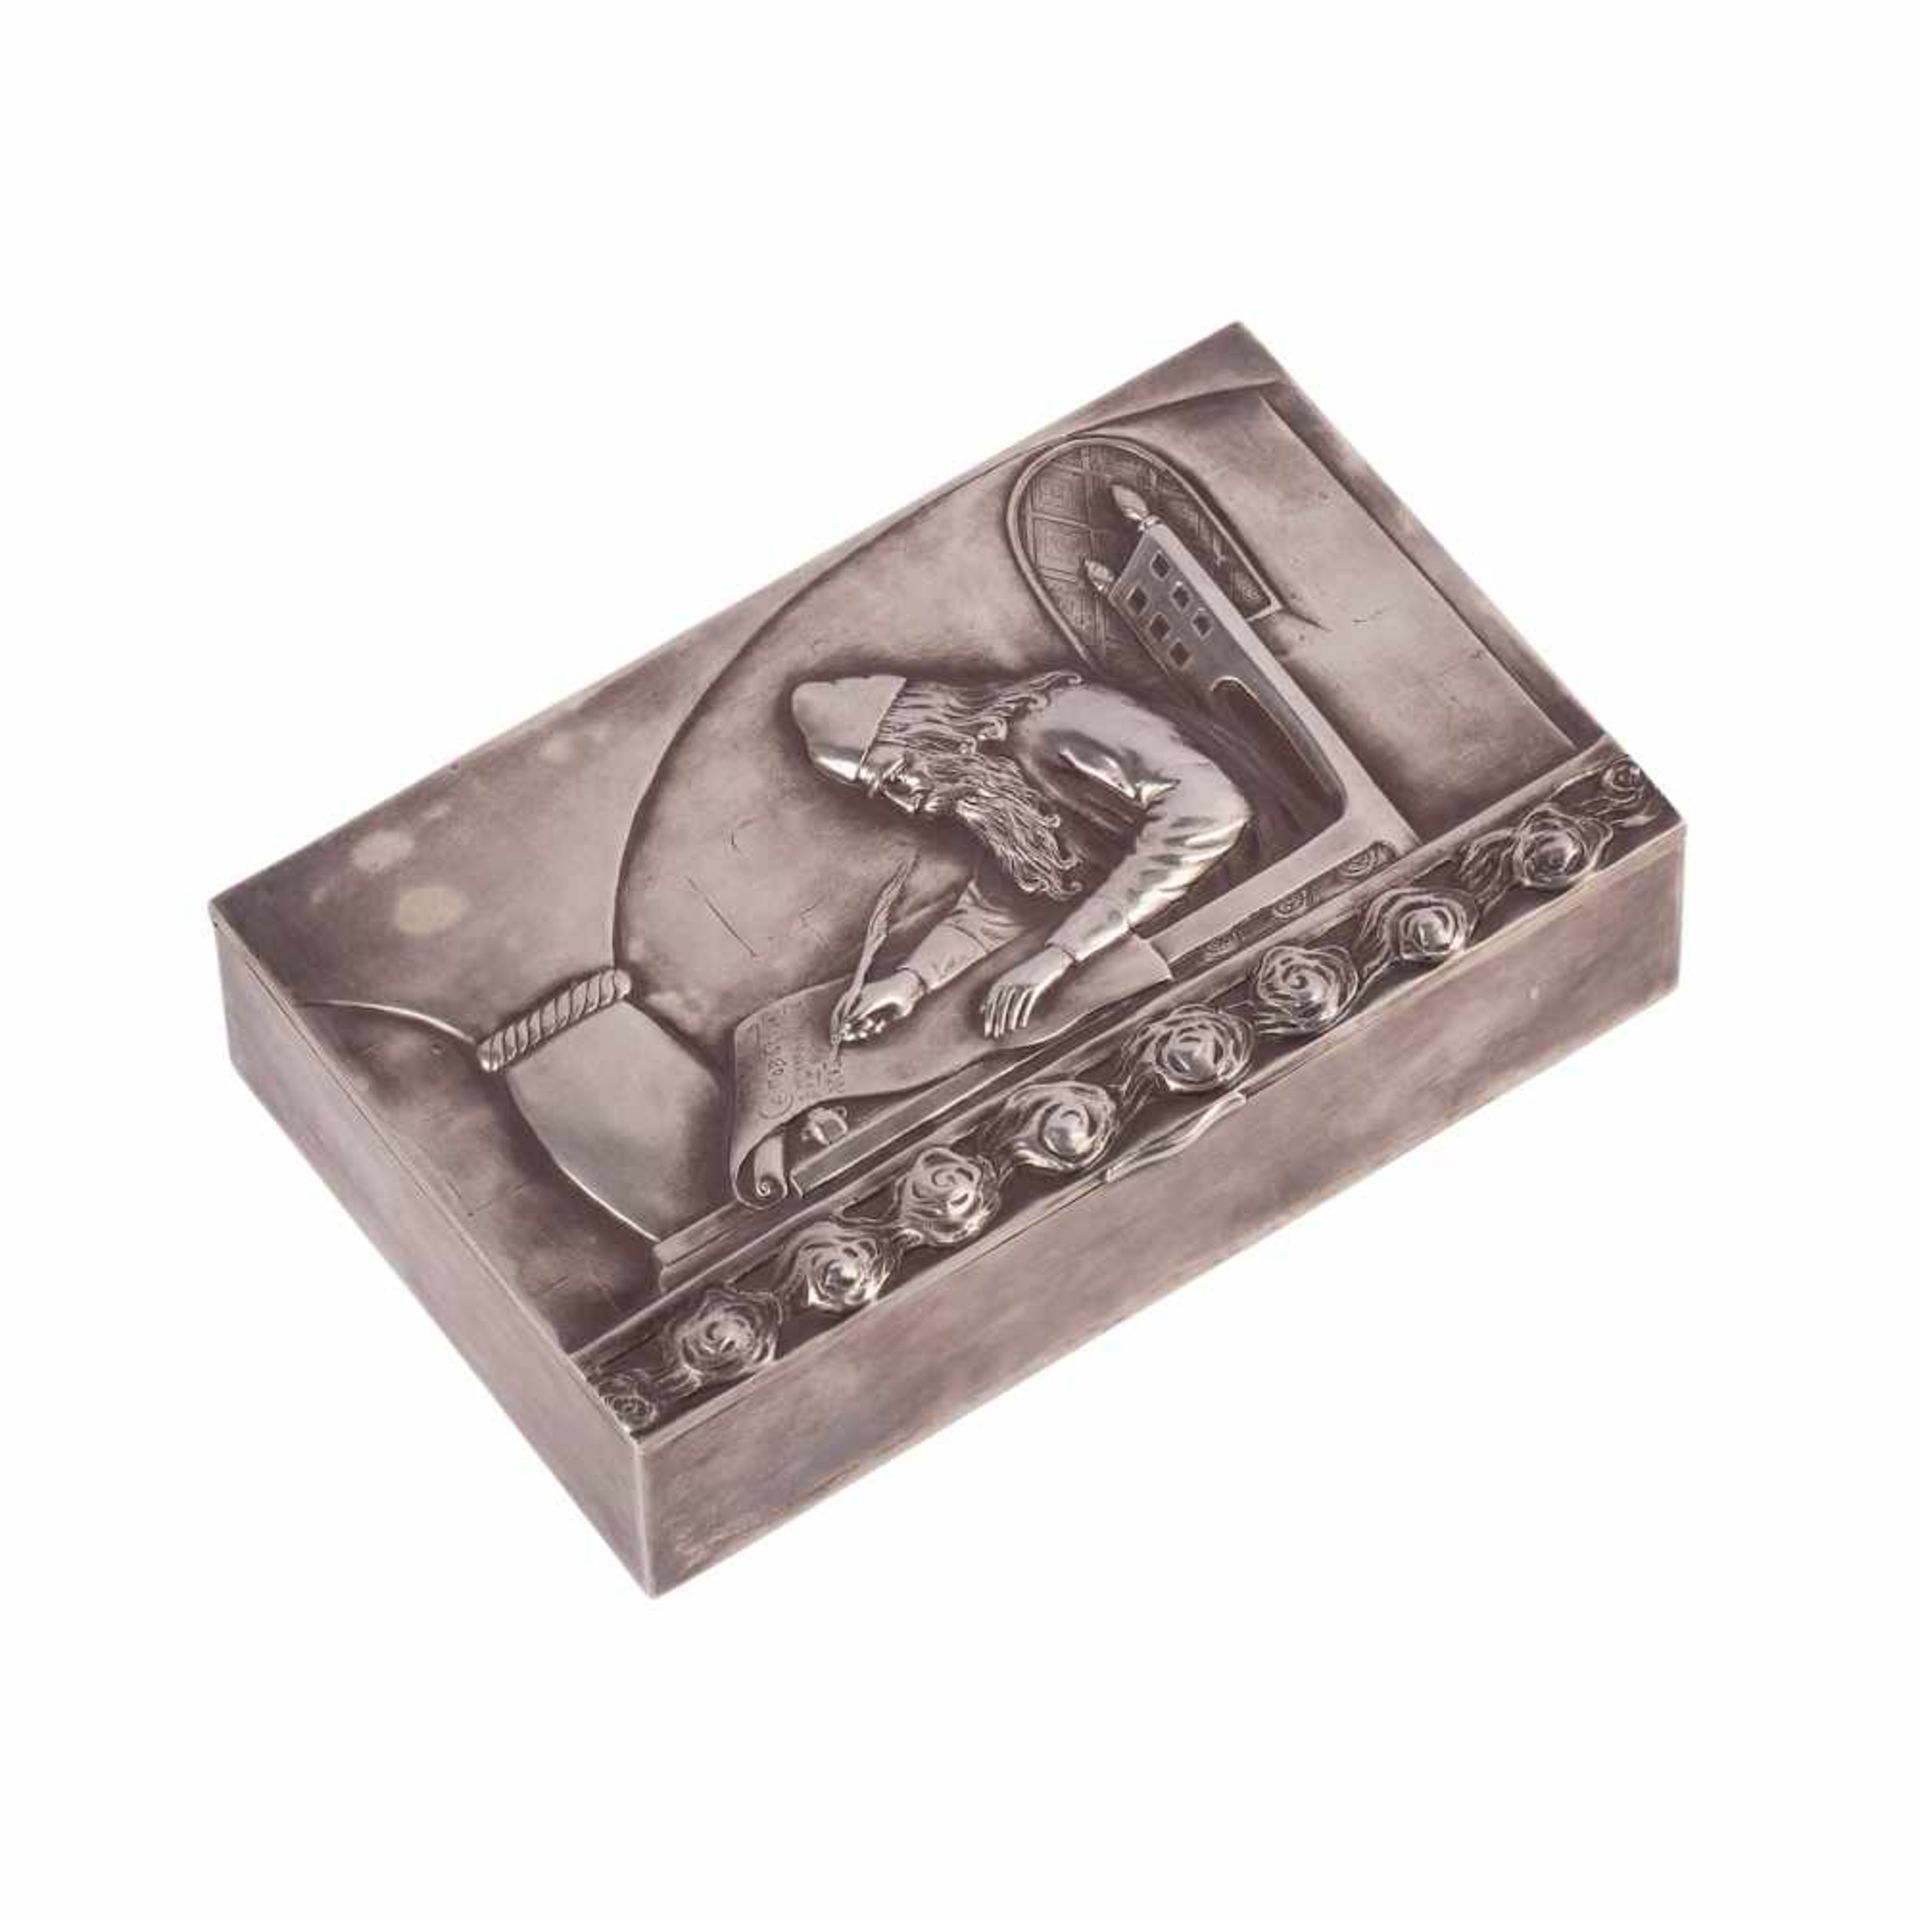 Russian silver-gilt and gem-set cigar boxA Russian silver-gilt and gem-set cigar box in neorussian